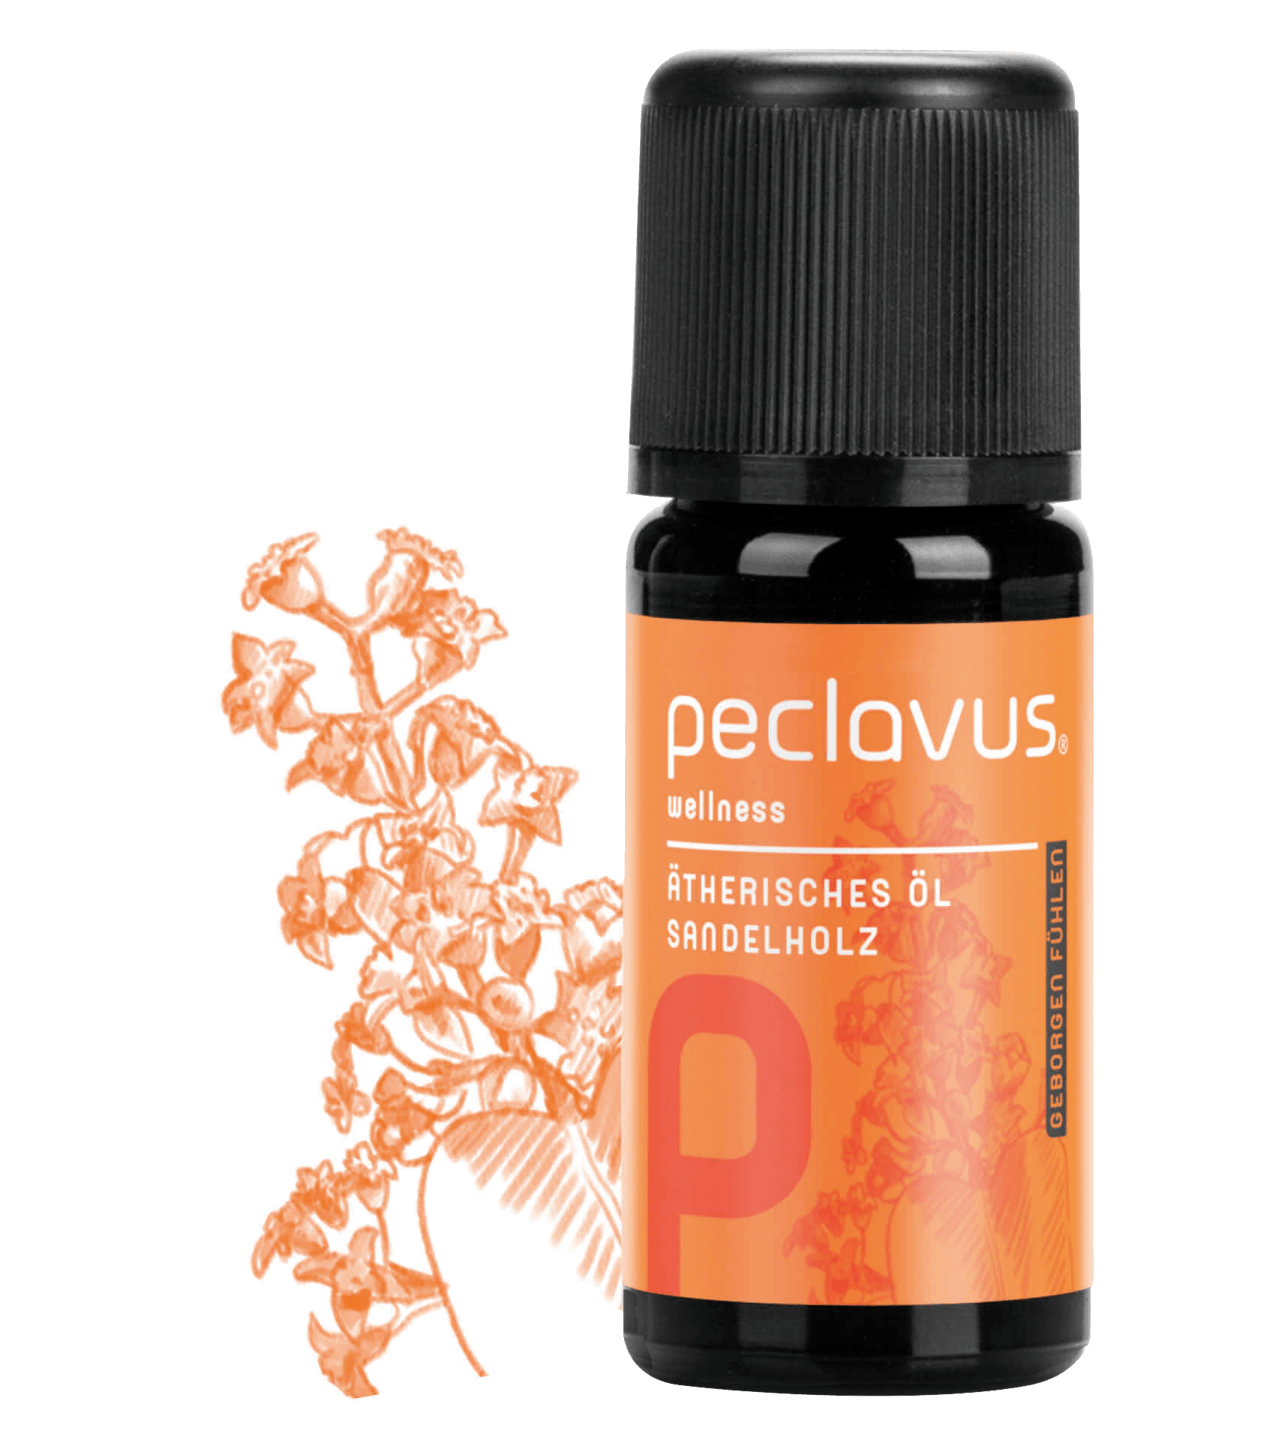 peclavus - Ätherisches Öl Sandelholz, 10 ml